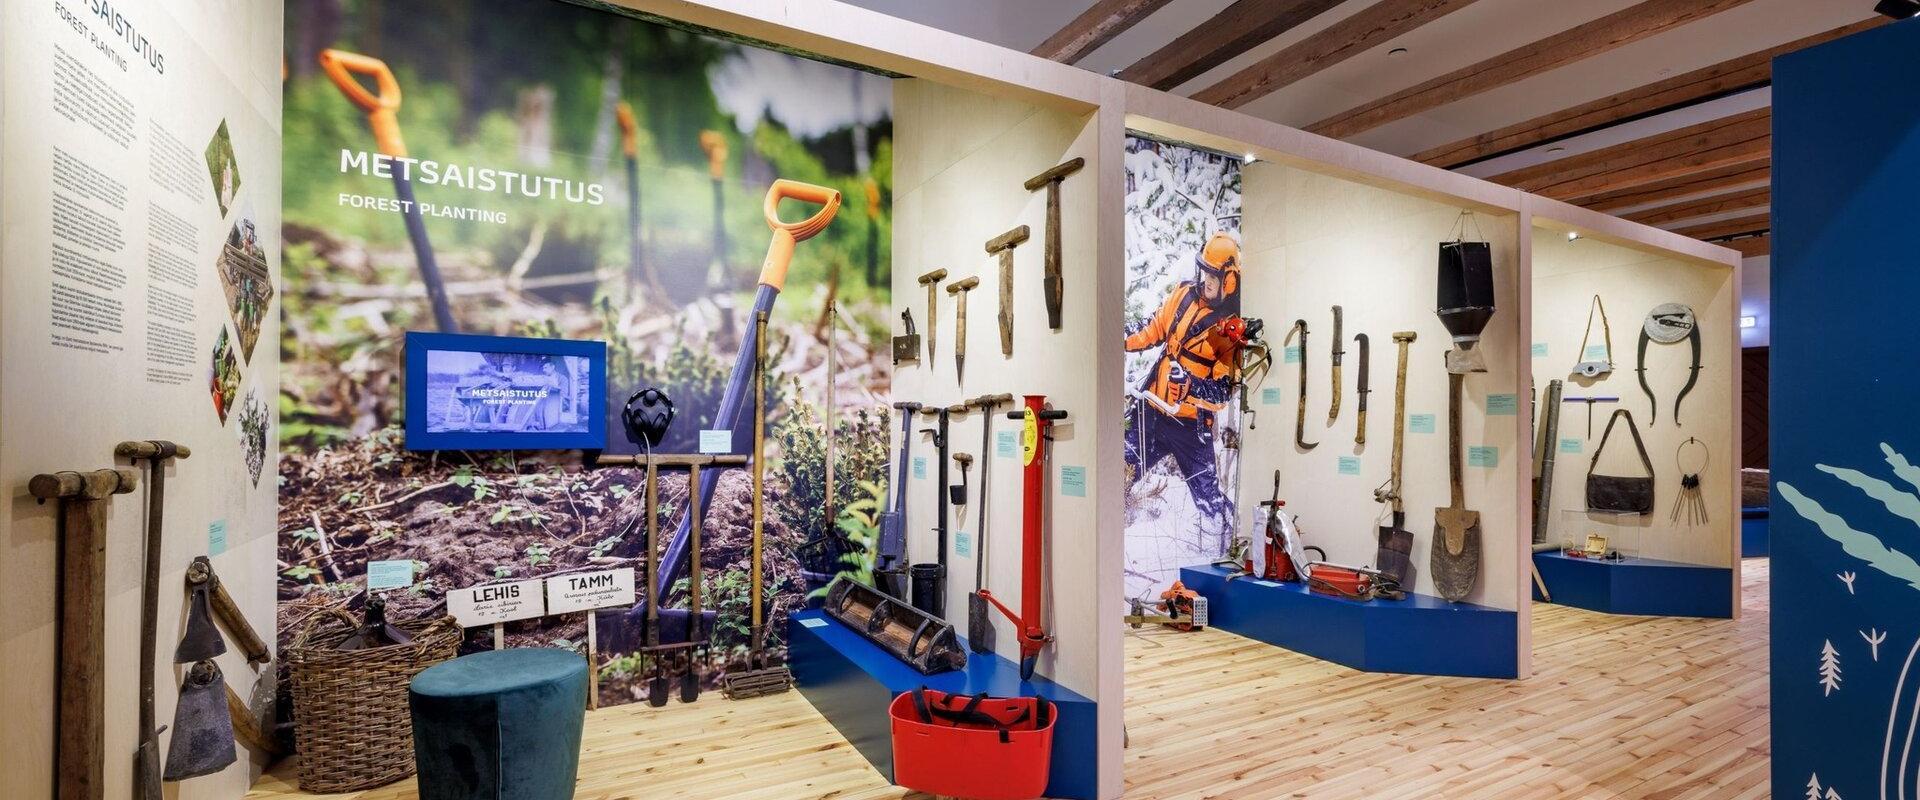 Dauerausstellung „Metsane teekond“ (dt. Waldige Reise) des Waldmuseums Sagadi